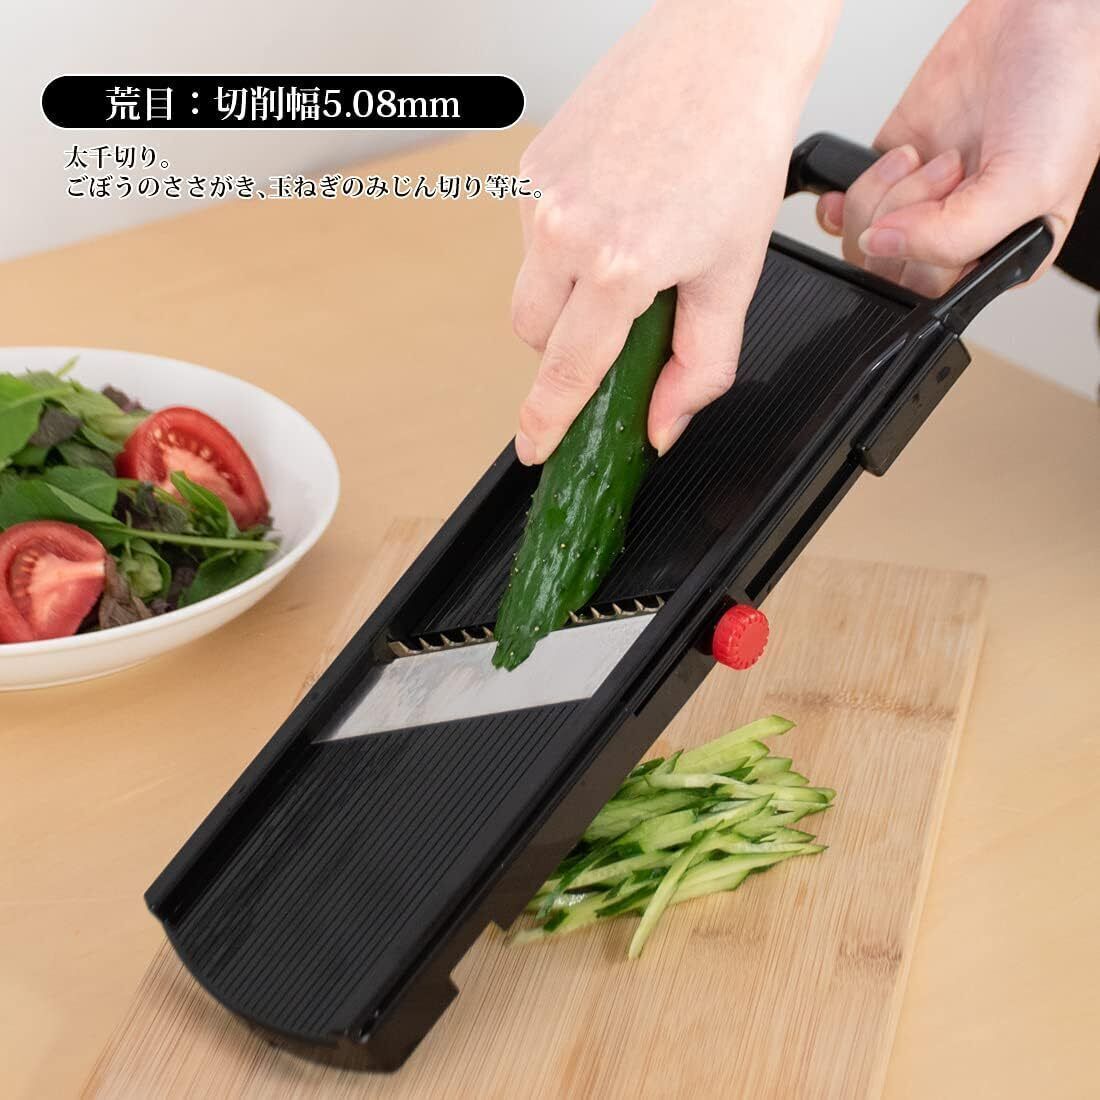 Shimomura Mandolin Vegetable Slicer - NikanKitchen (日韓台所)